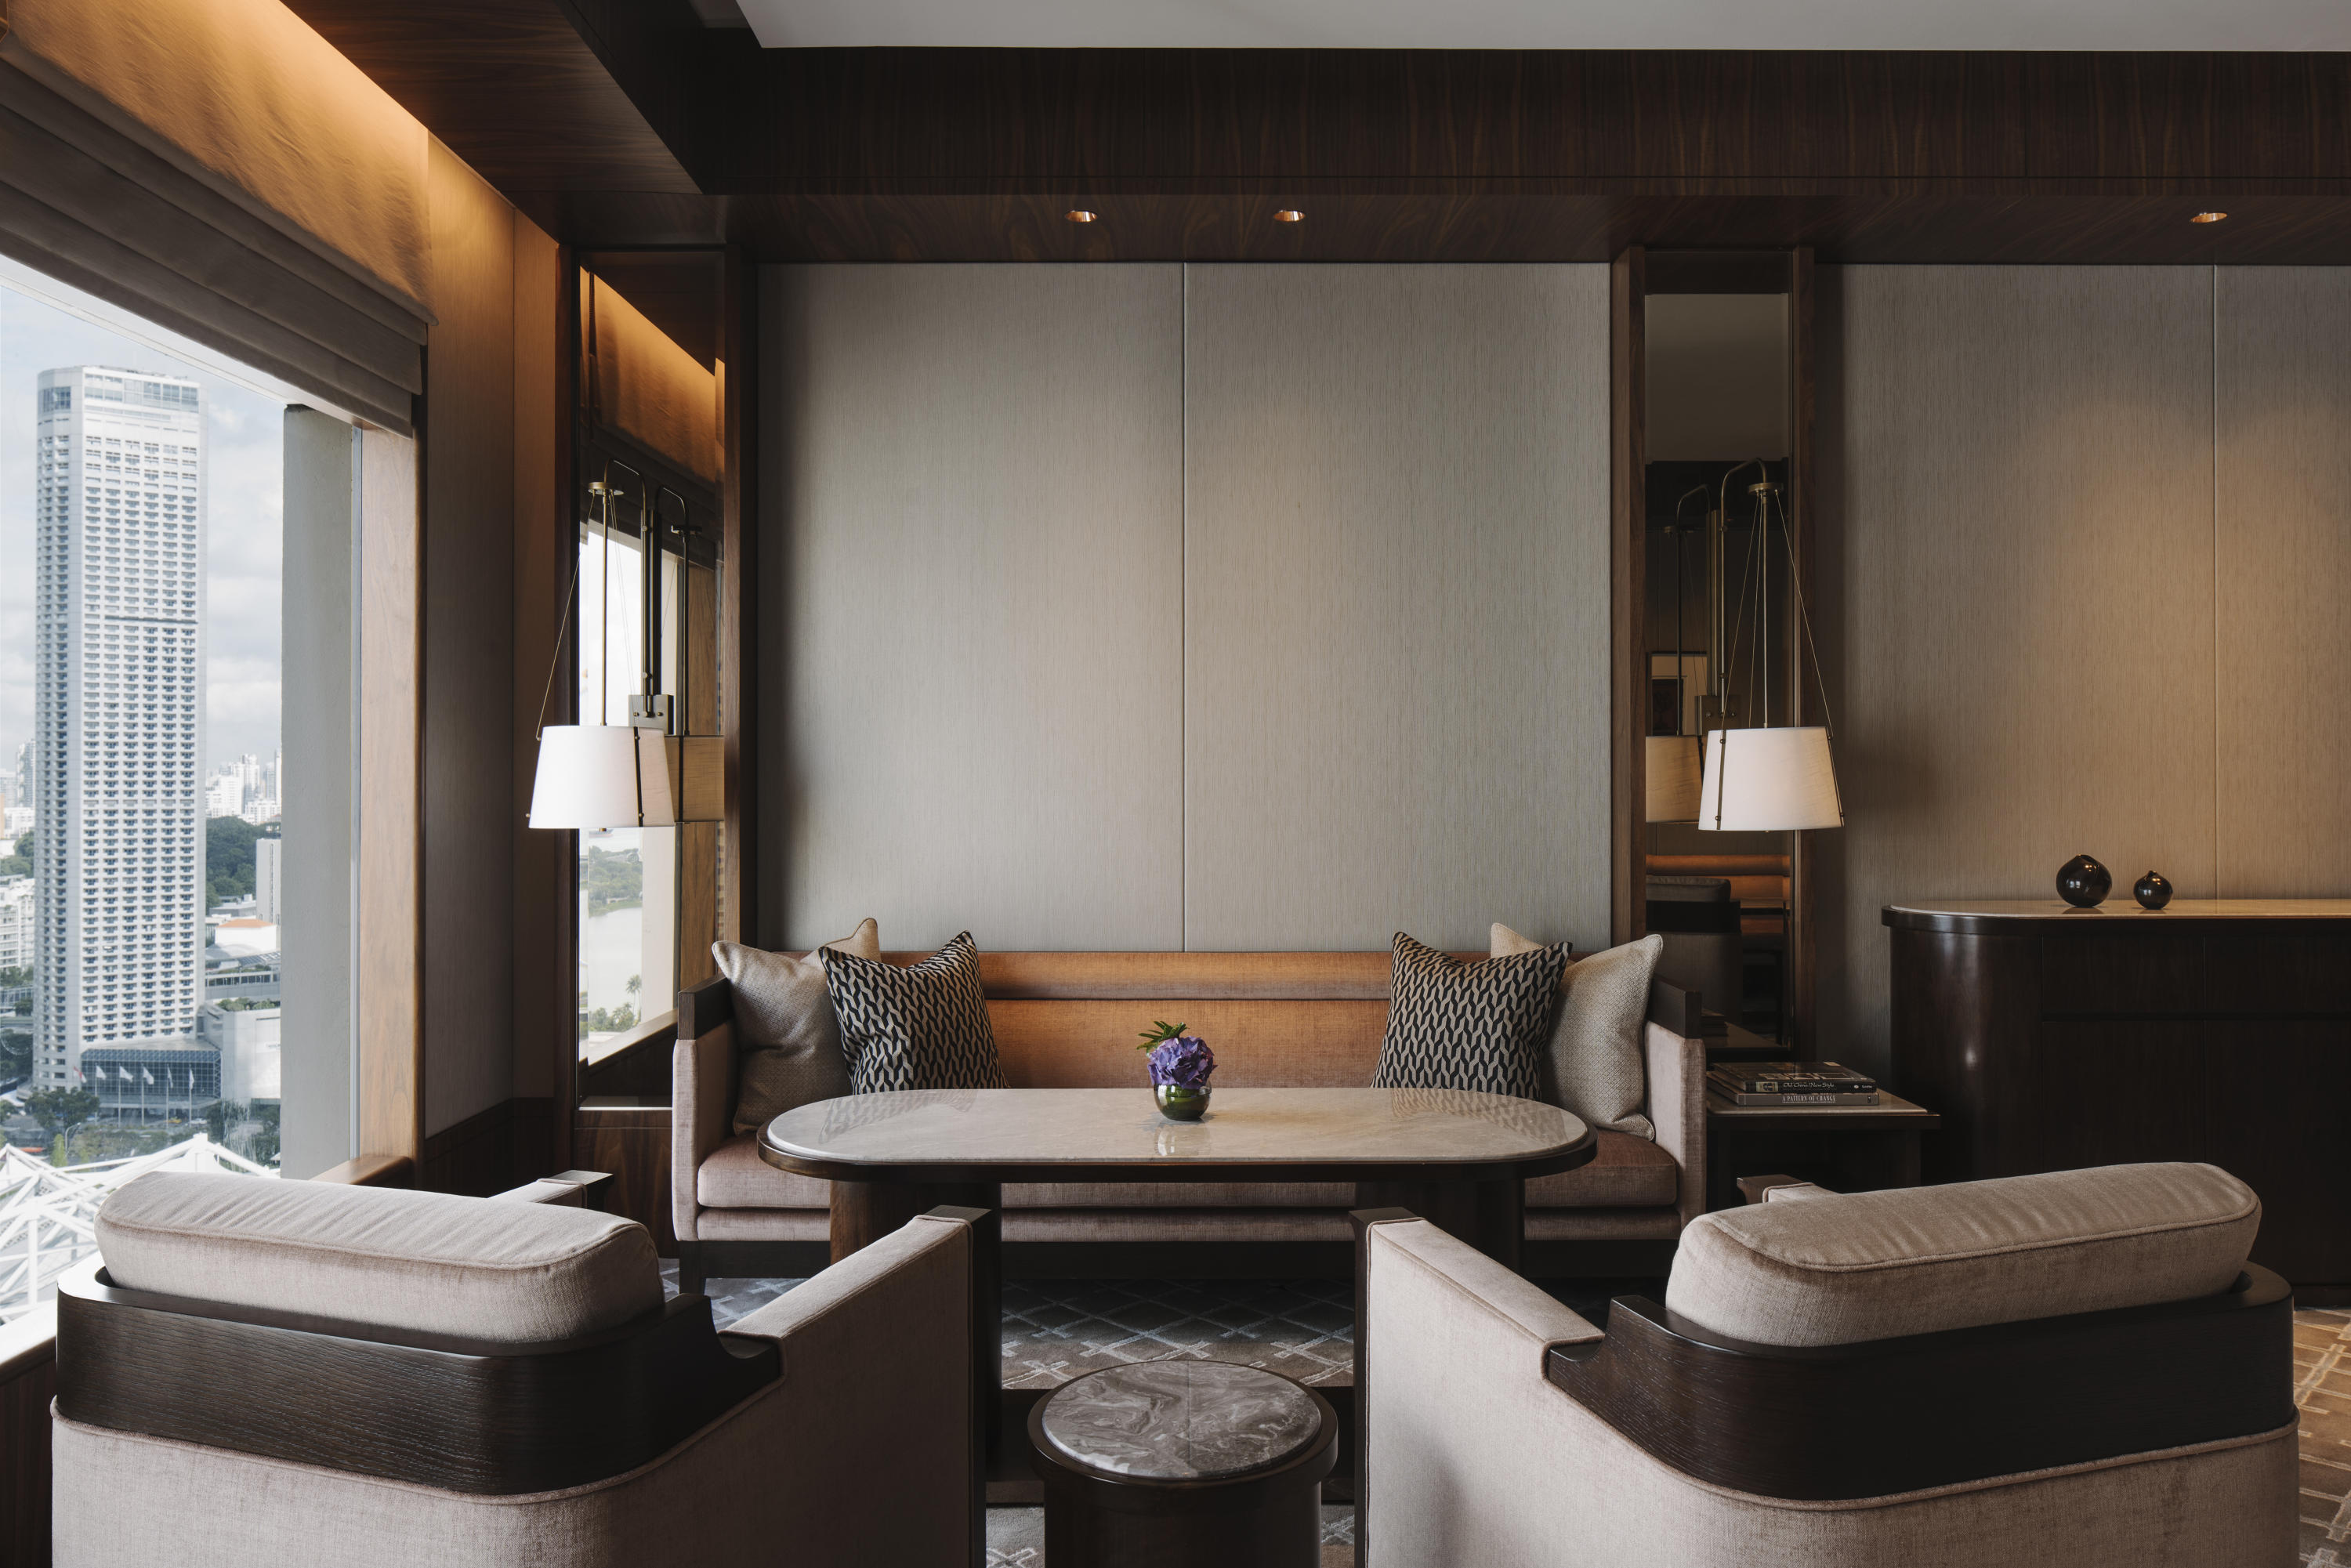 Executive Lounge, Conrad Hotel by Brewin Design Office